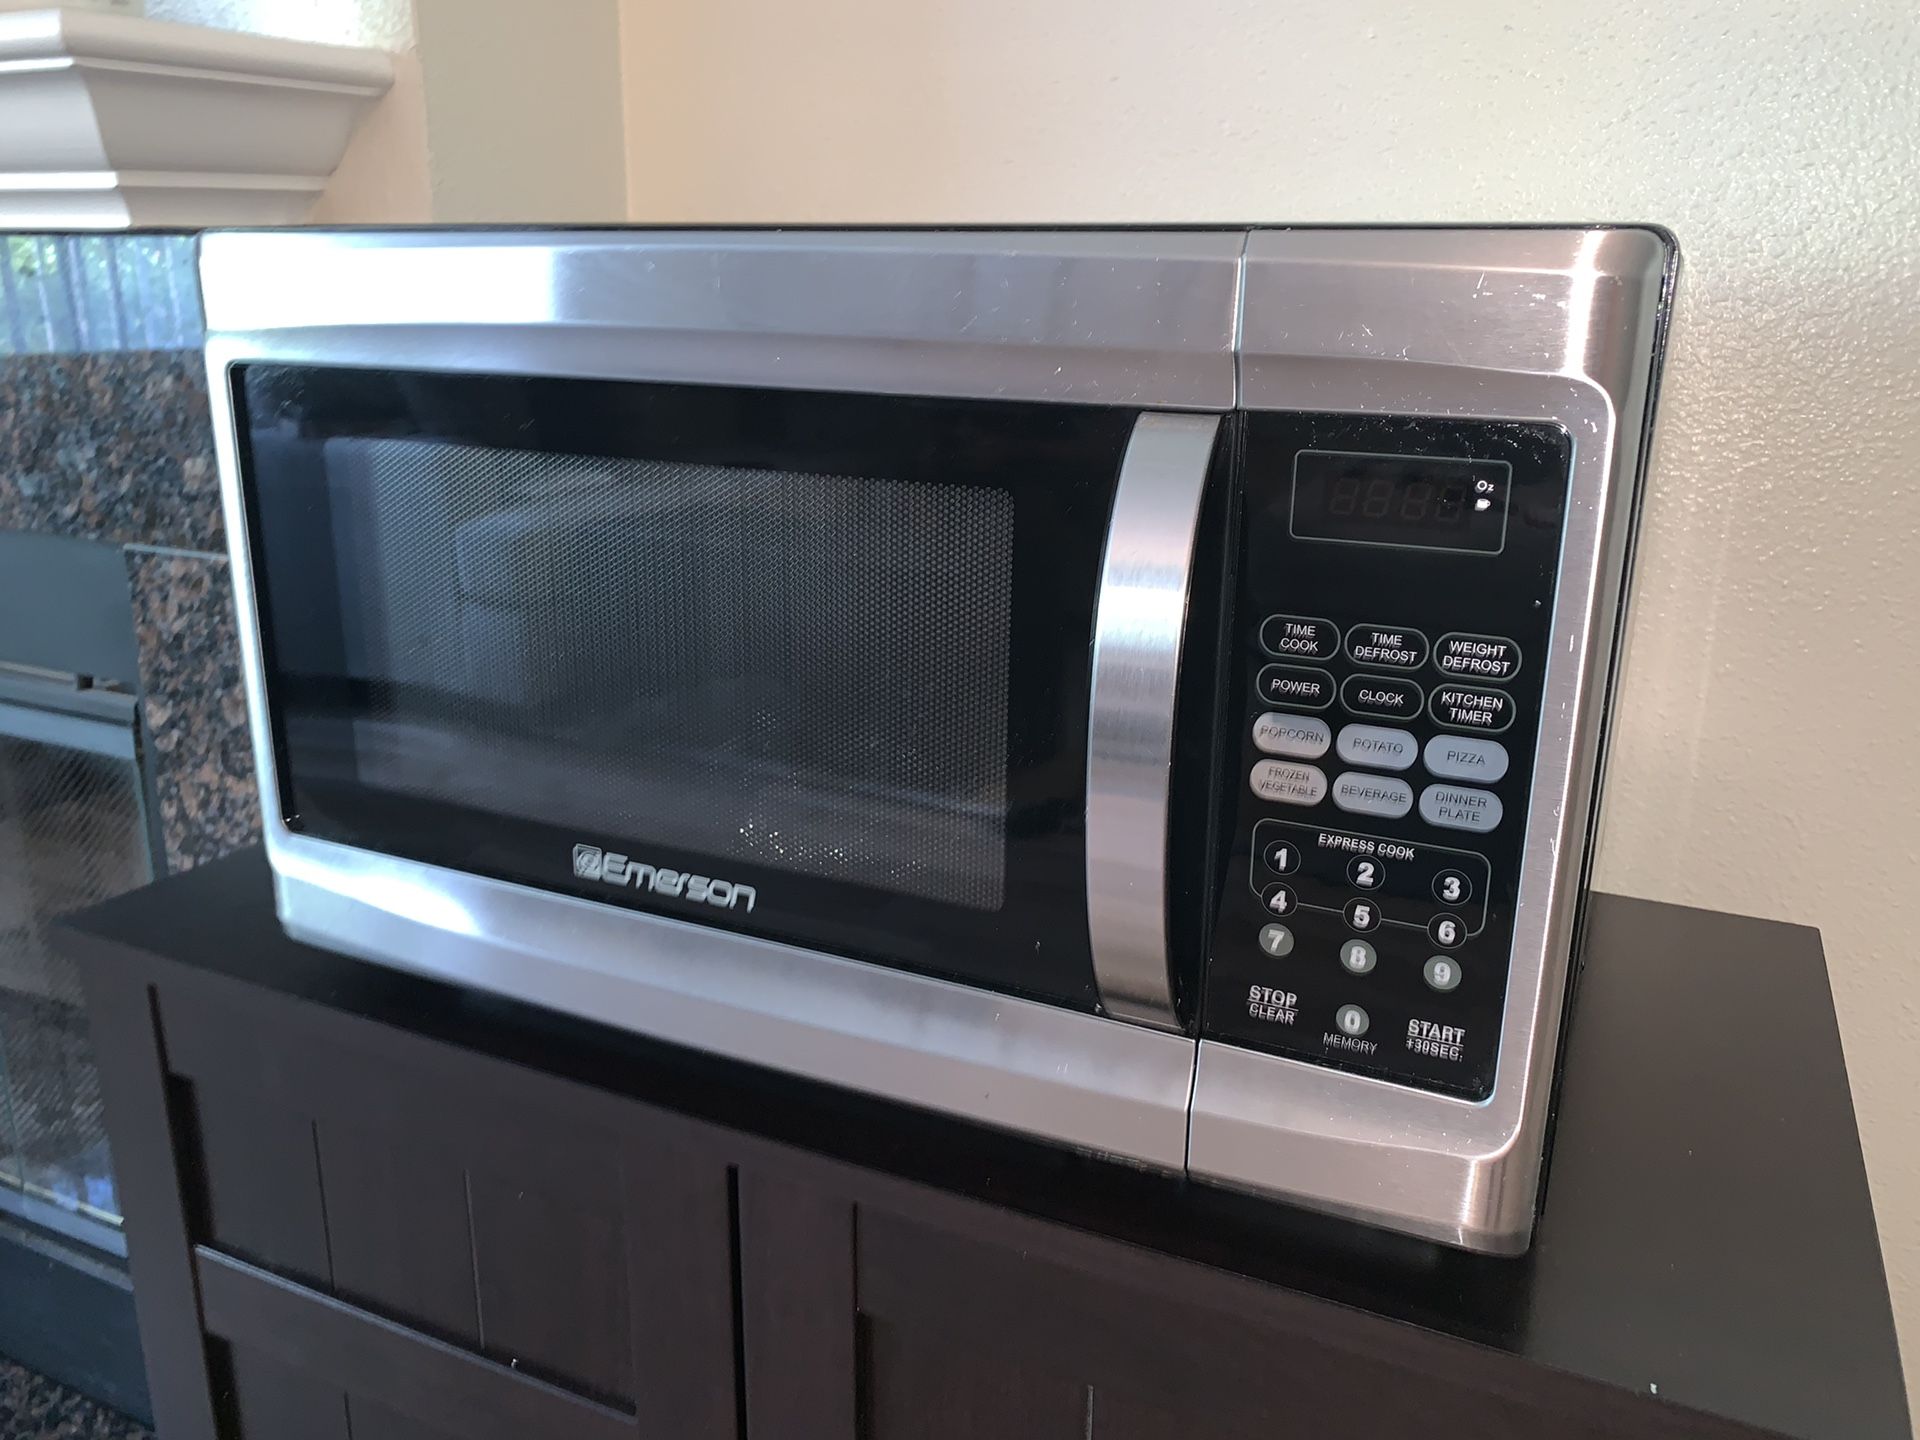 Emerson 1000watt Microwave - Like New